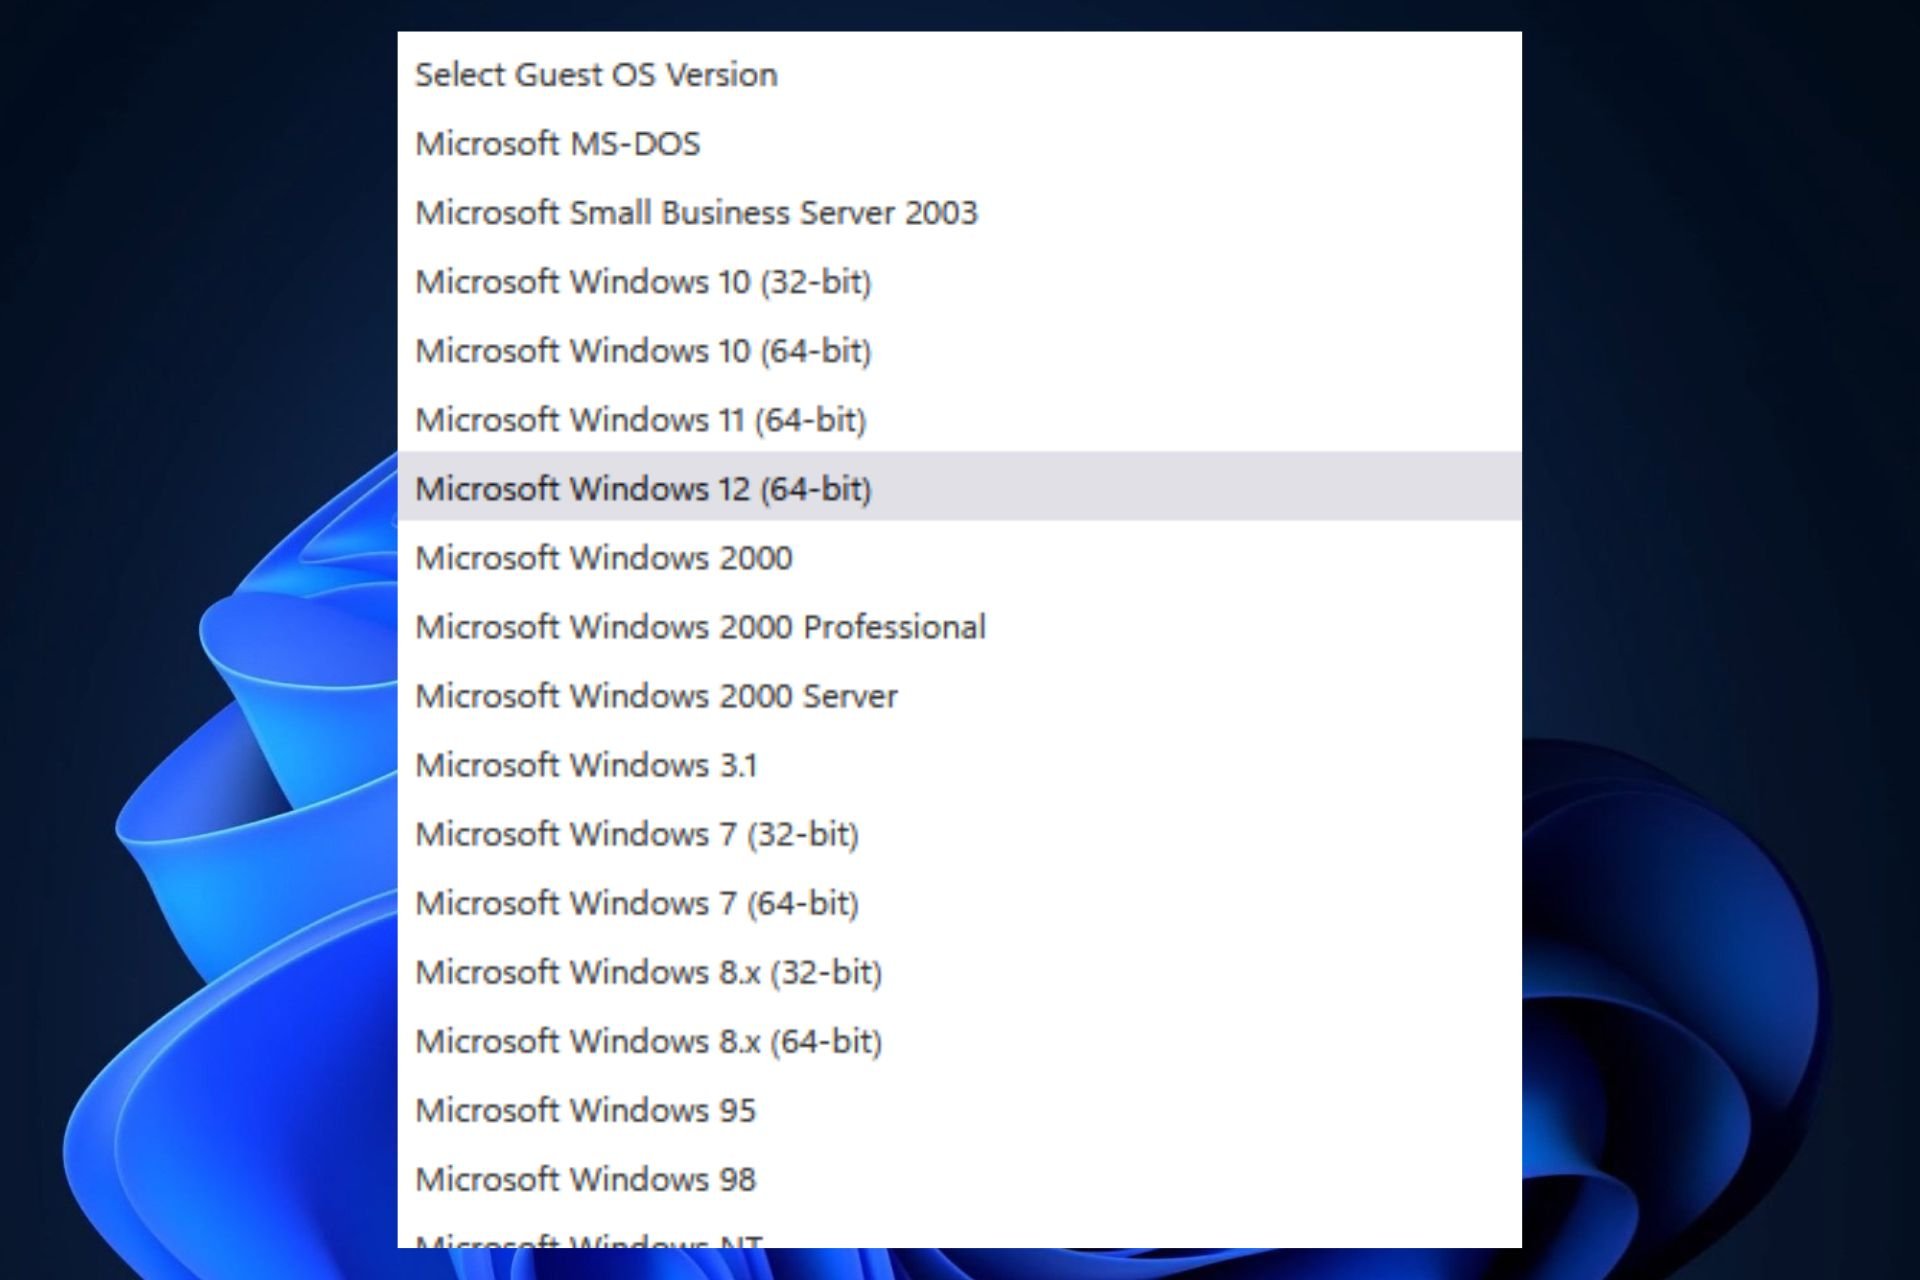 Is Windows 12 64-bit?